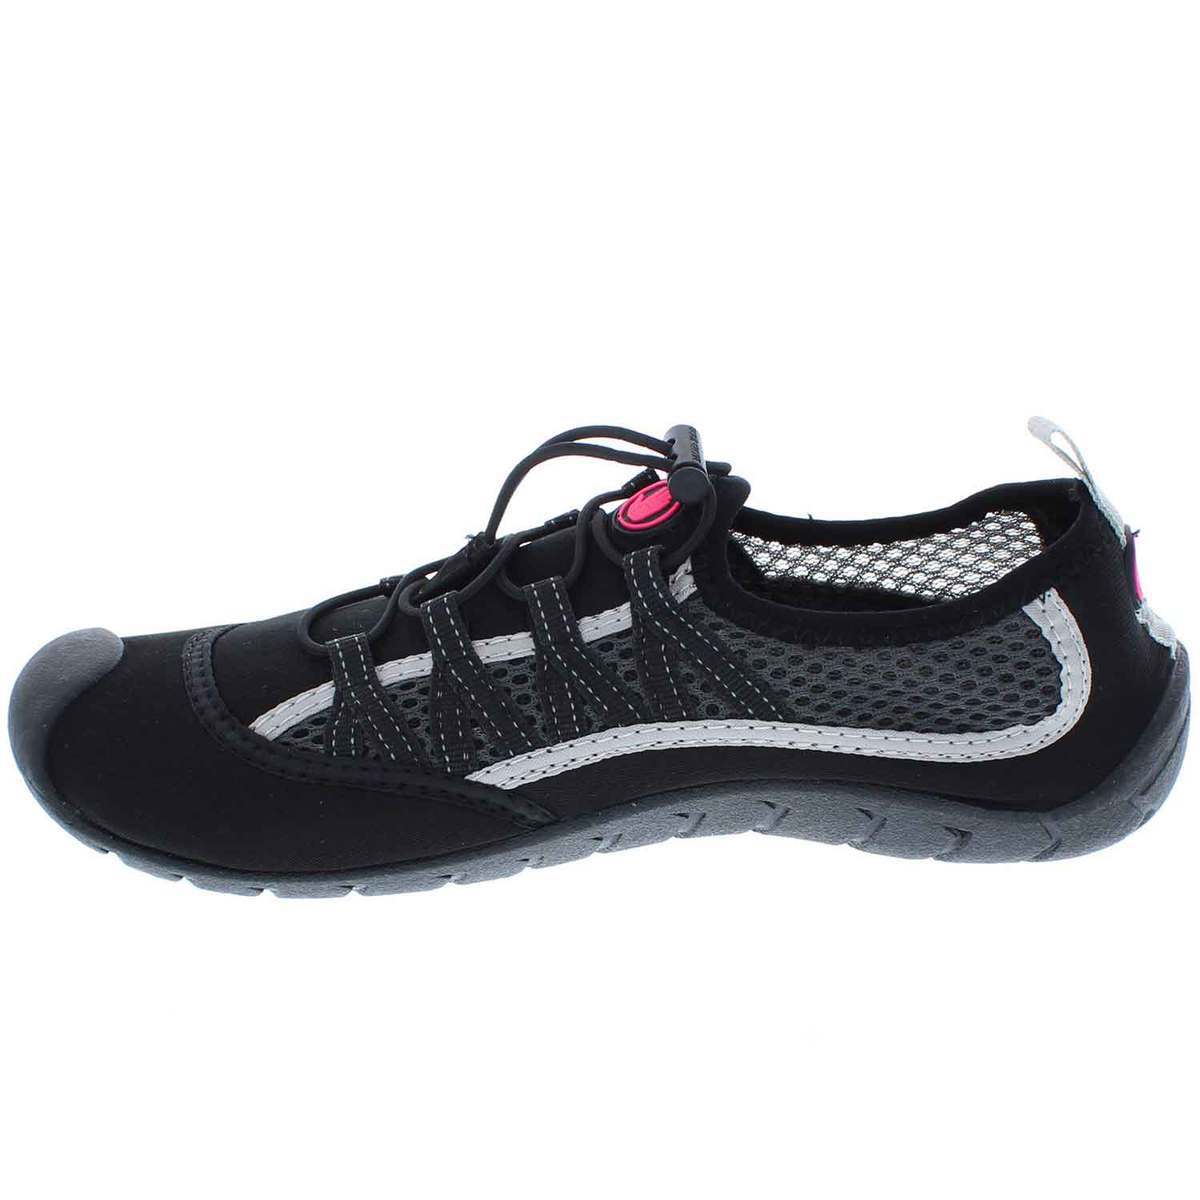 Body Glove Women's Sidewinder Water Shoes - Black - Size 7 - Black 7 ...